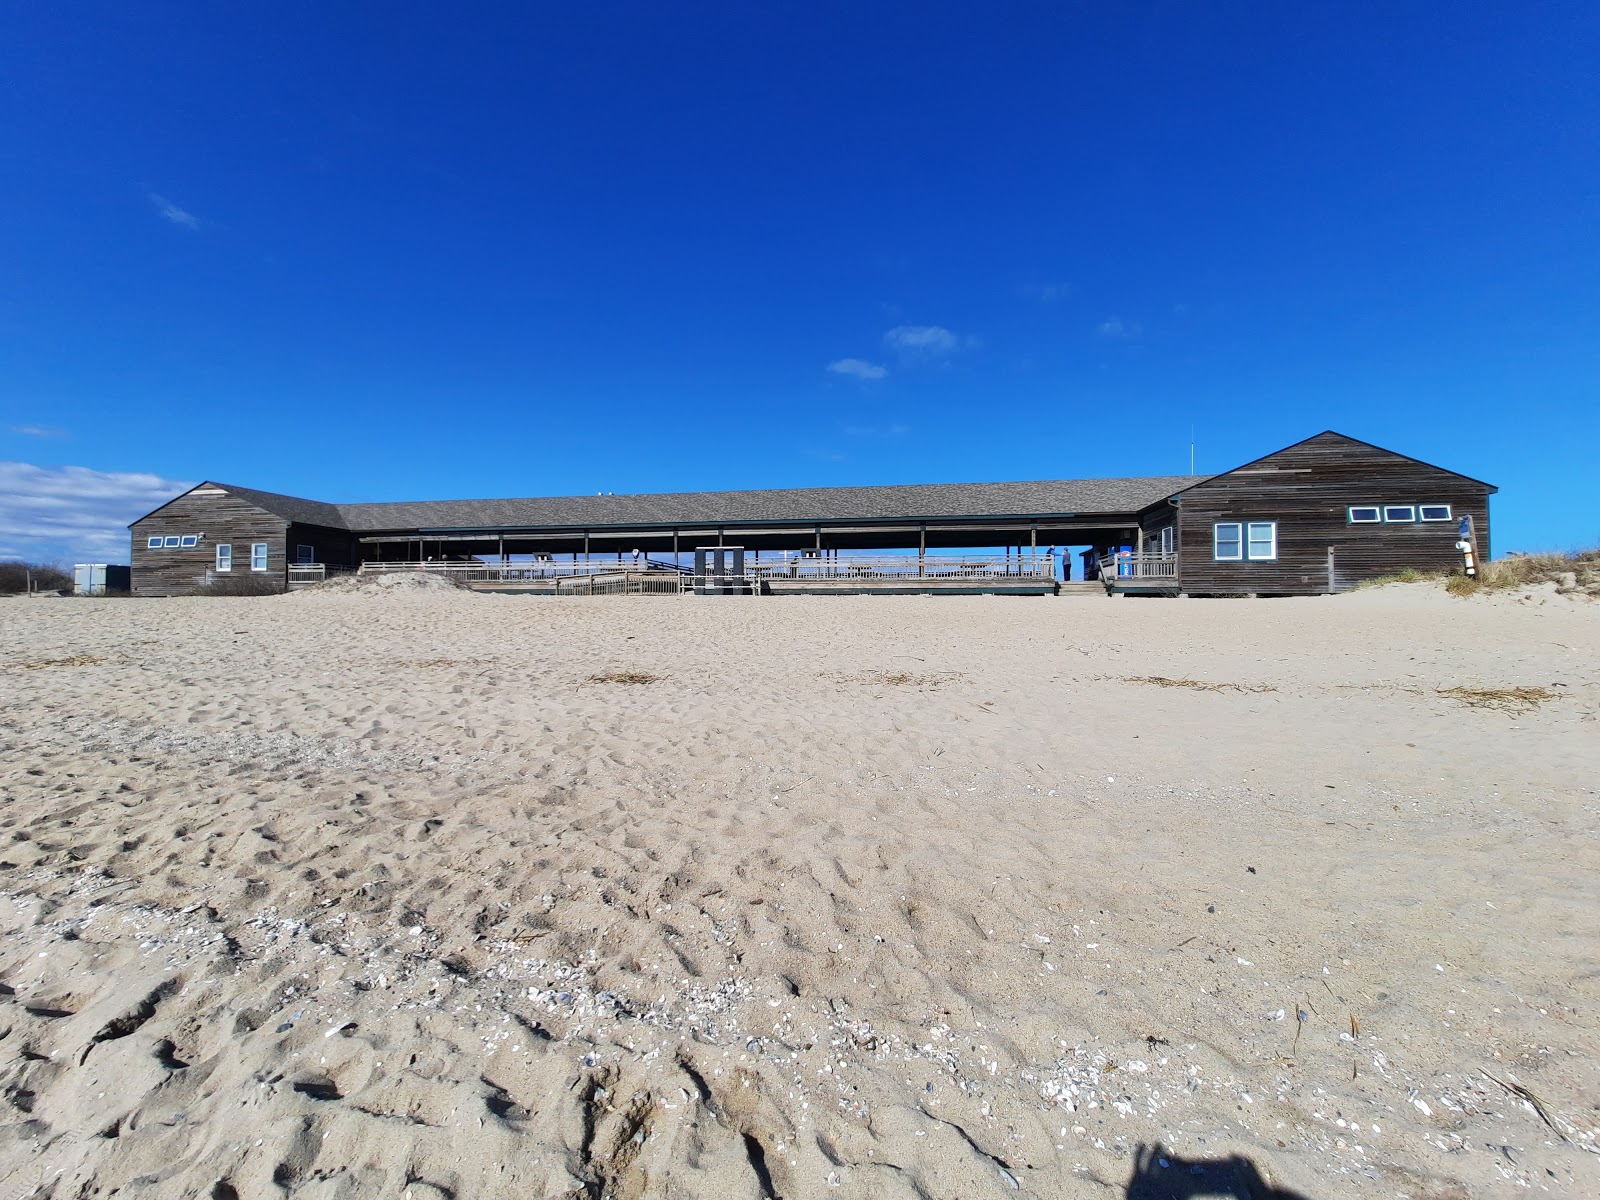 Foto de Hammonasset Beach - lugar popular entre os apreciadores de relaxamento